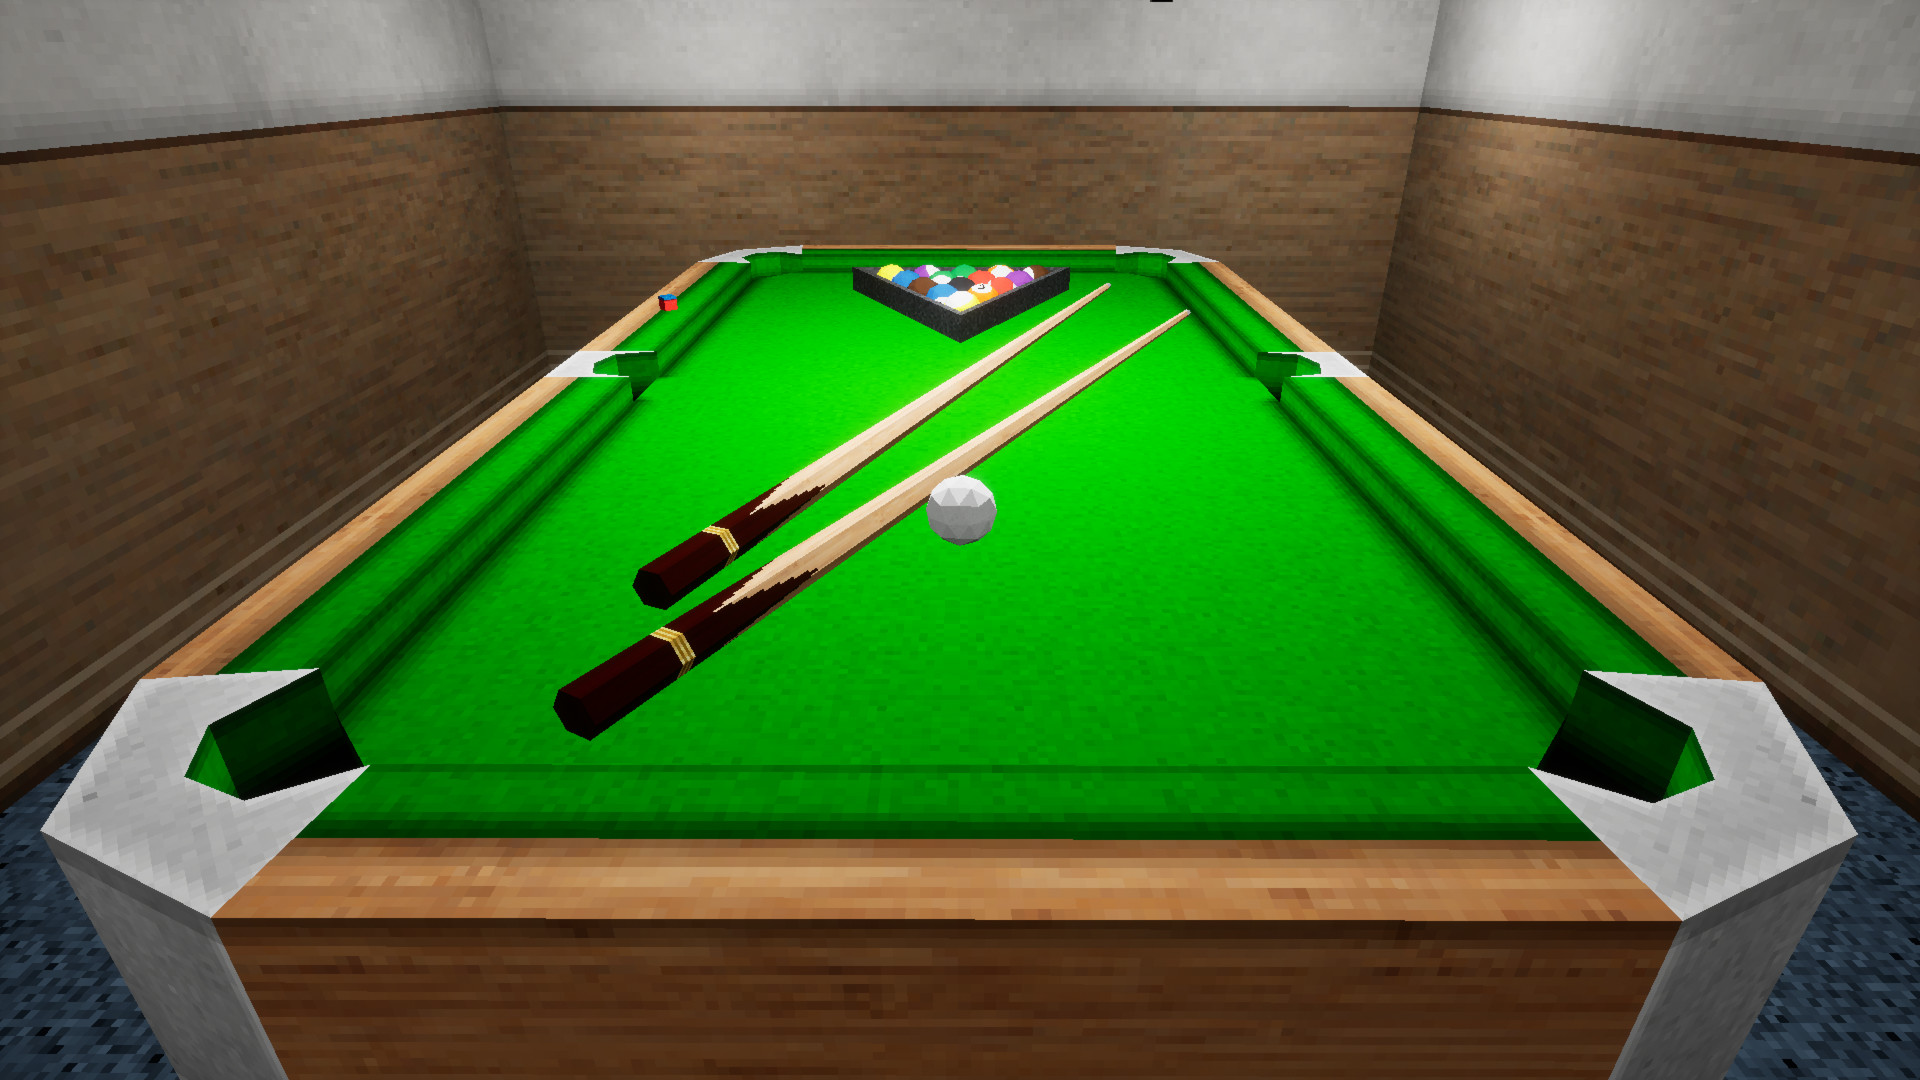 Buy Pool Nation Snooker Bundle